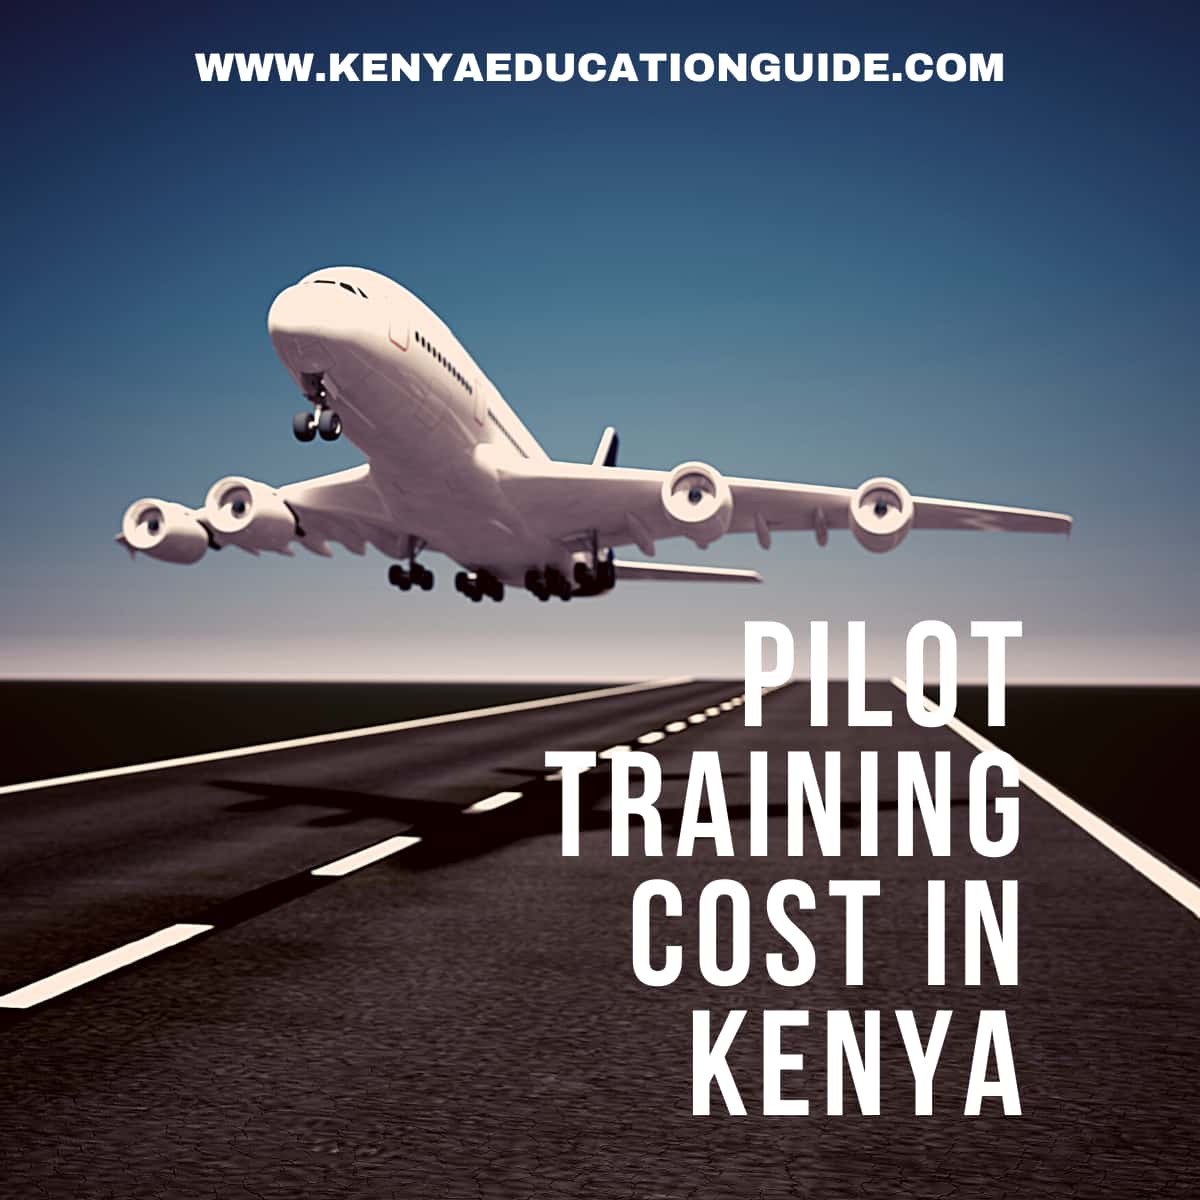 Cost of pilot training in Kenya